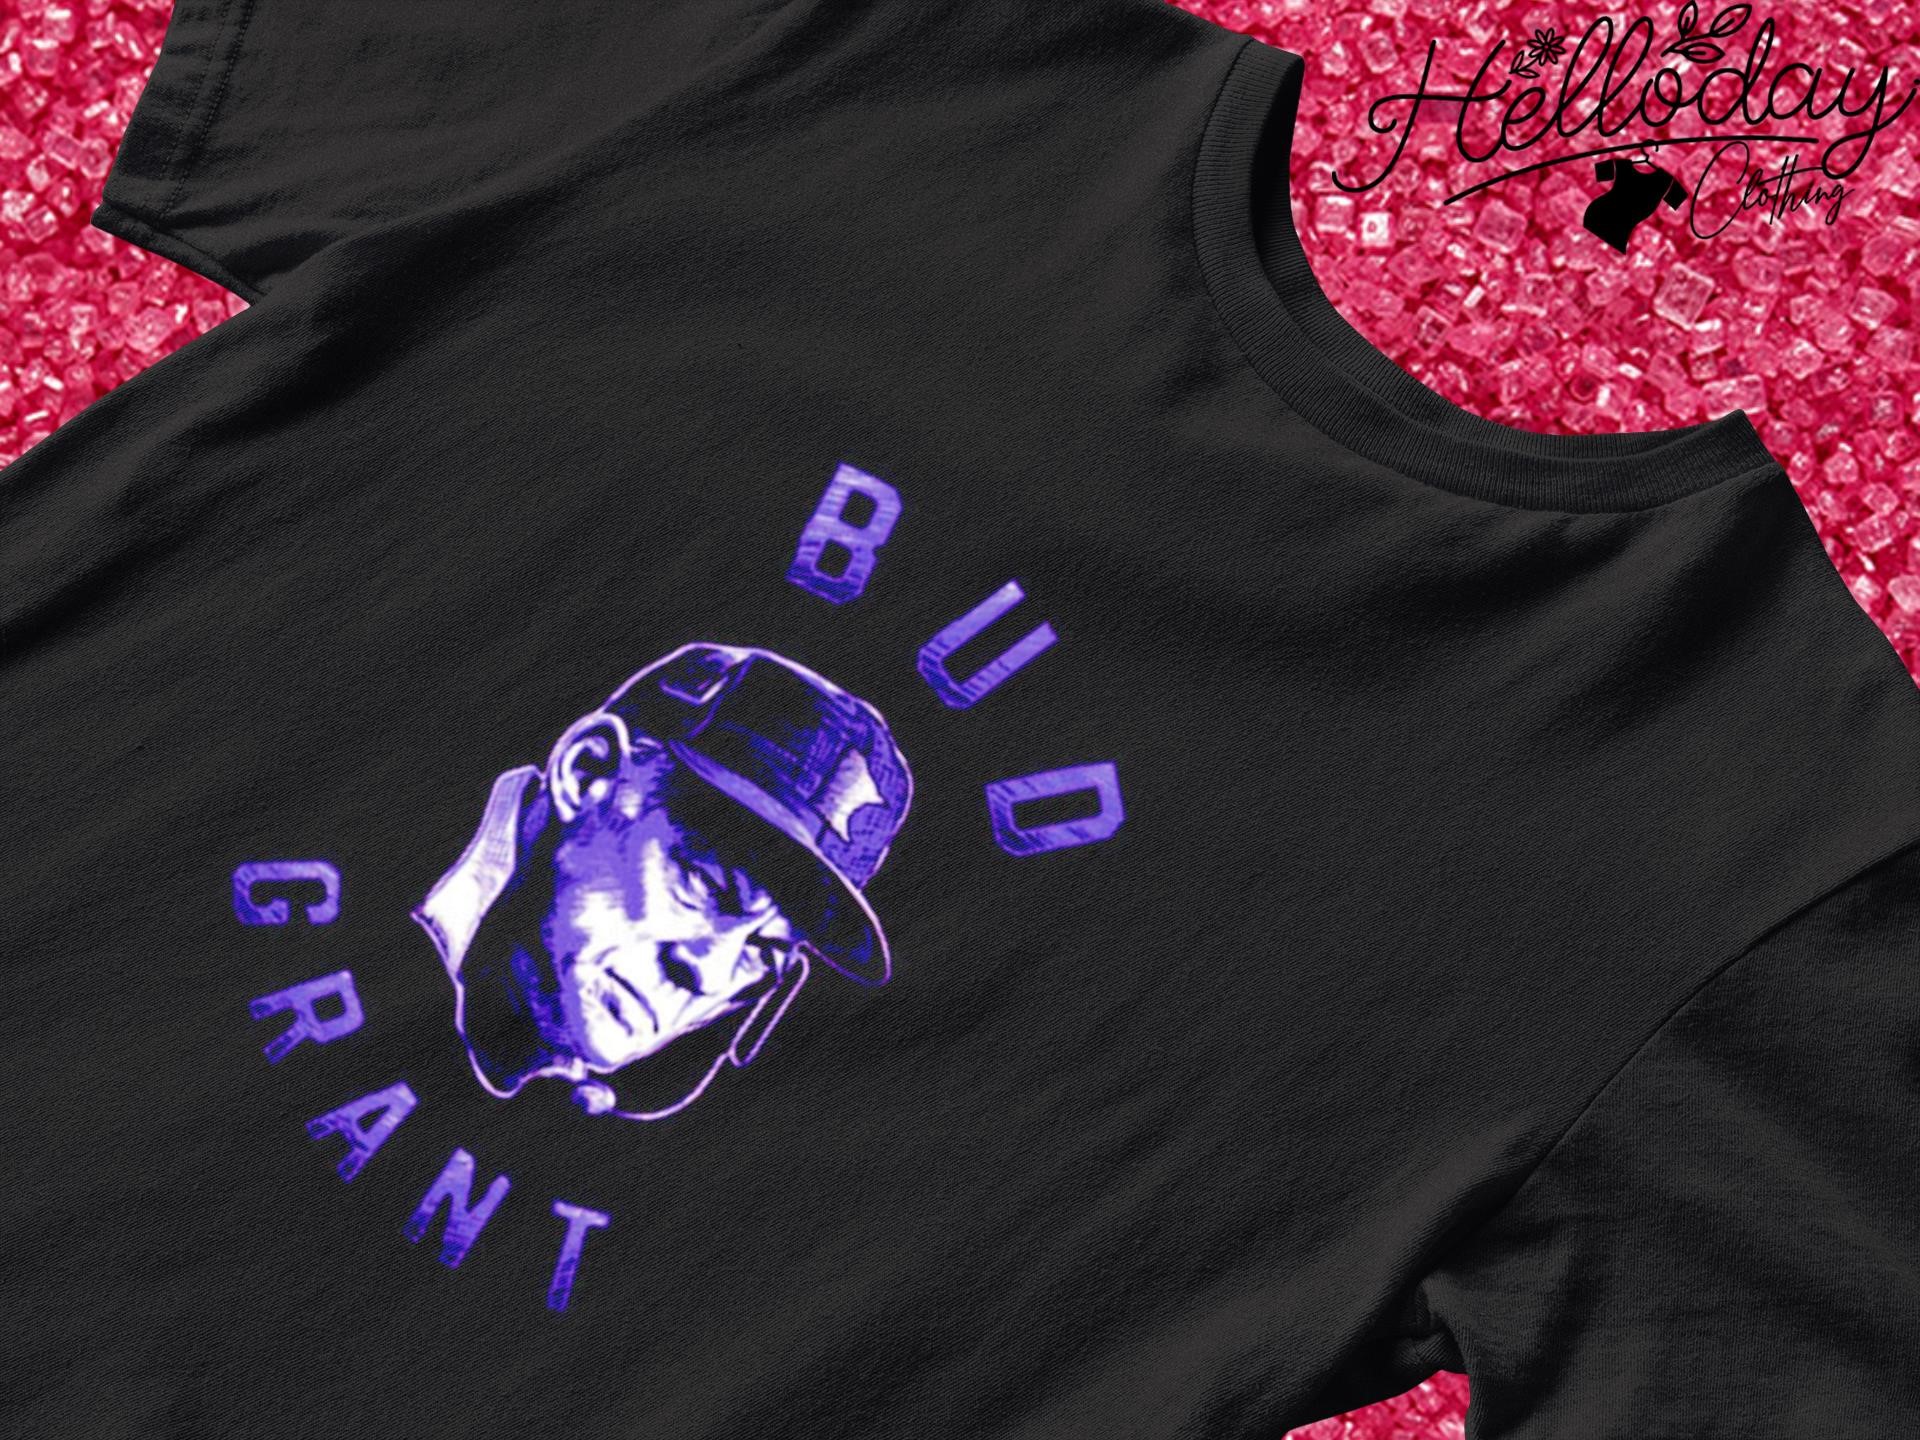 Bud Grant Vikings shirt